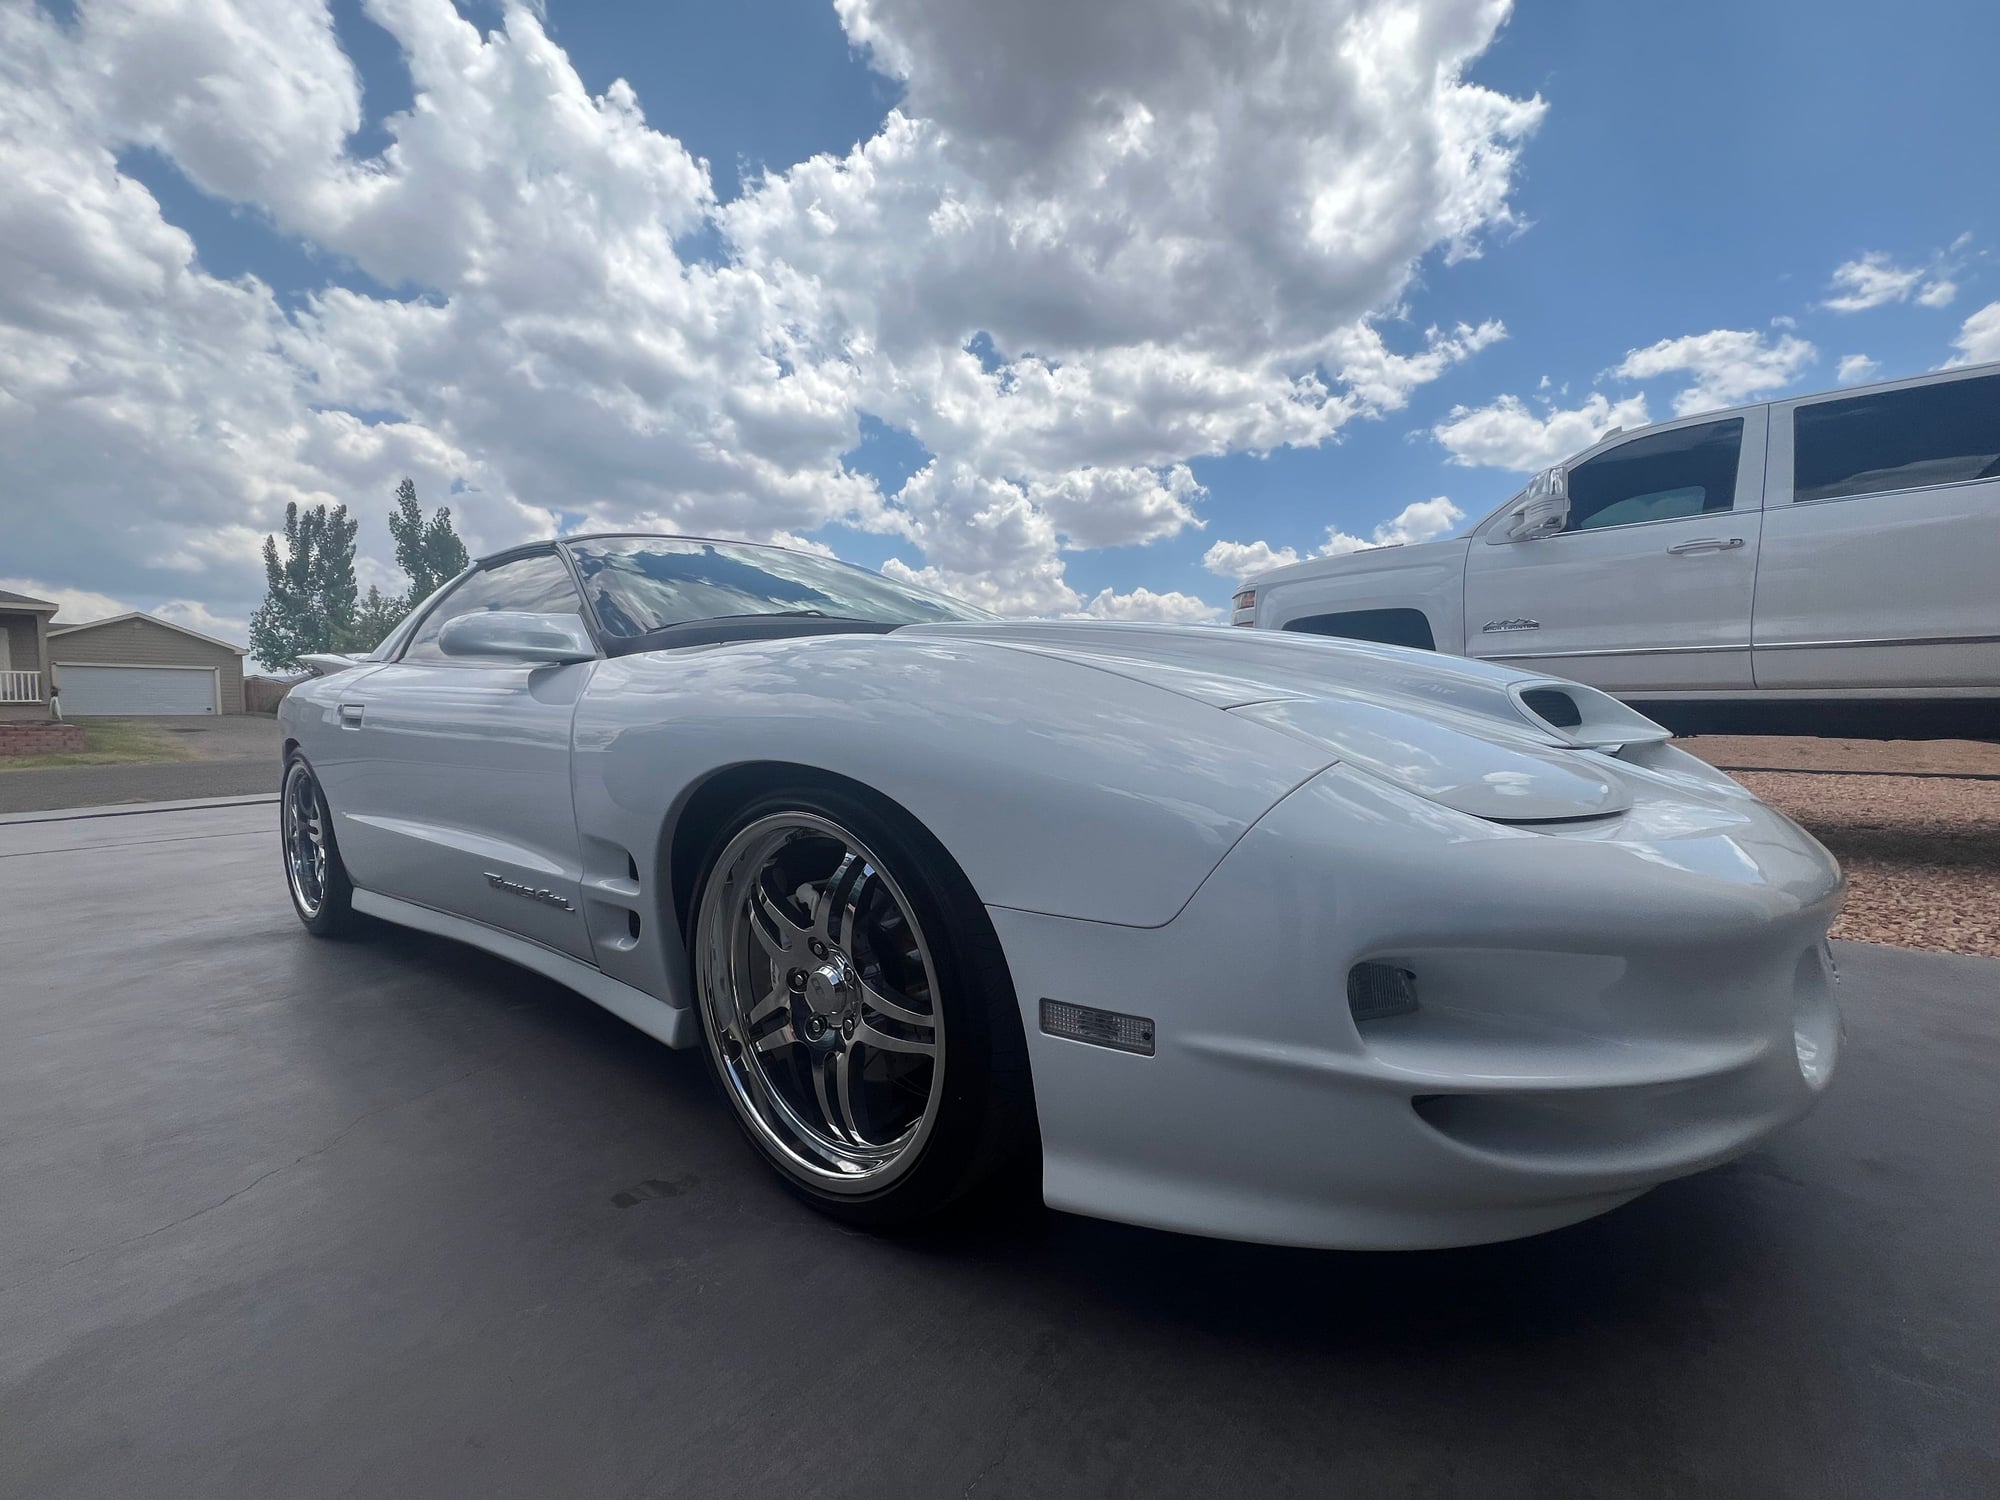 2000 Pontiac Firebird - Stunning artic white 2000 ws6 - Used - Alpine, TX 79830, United States